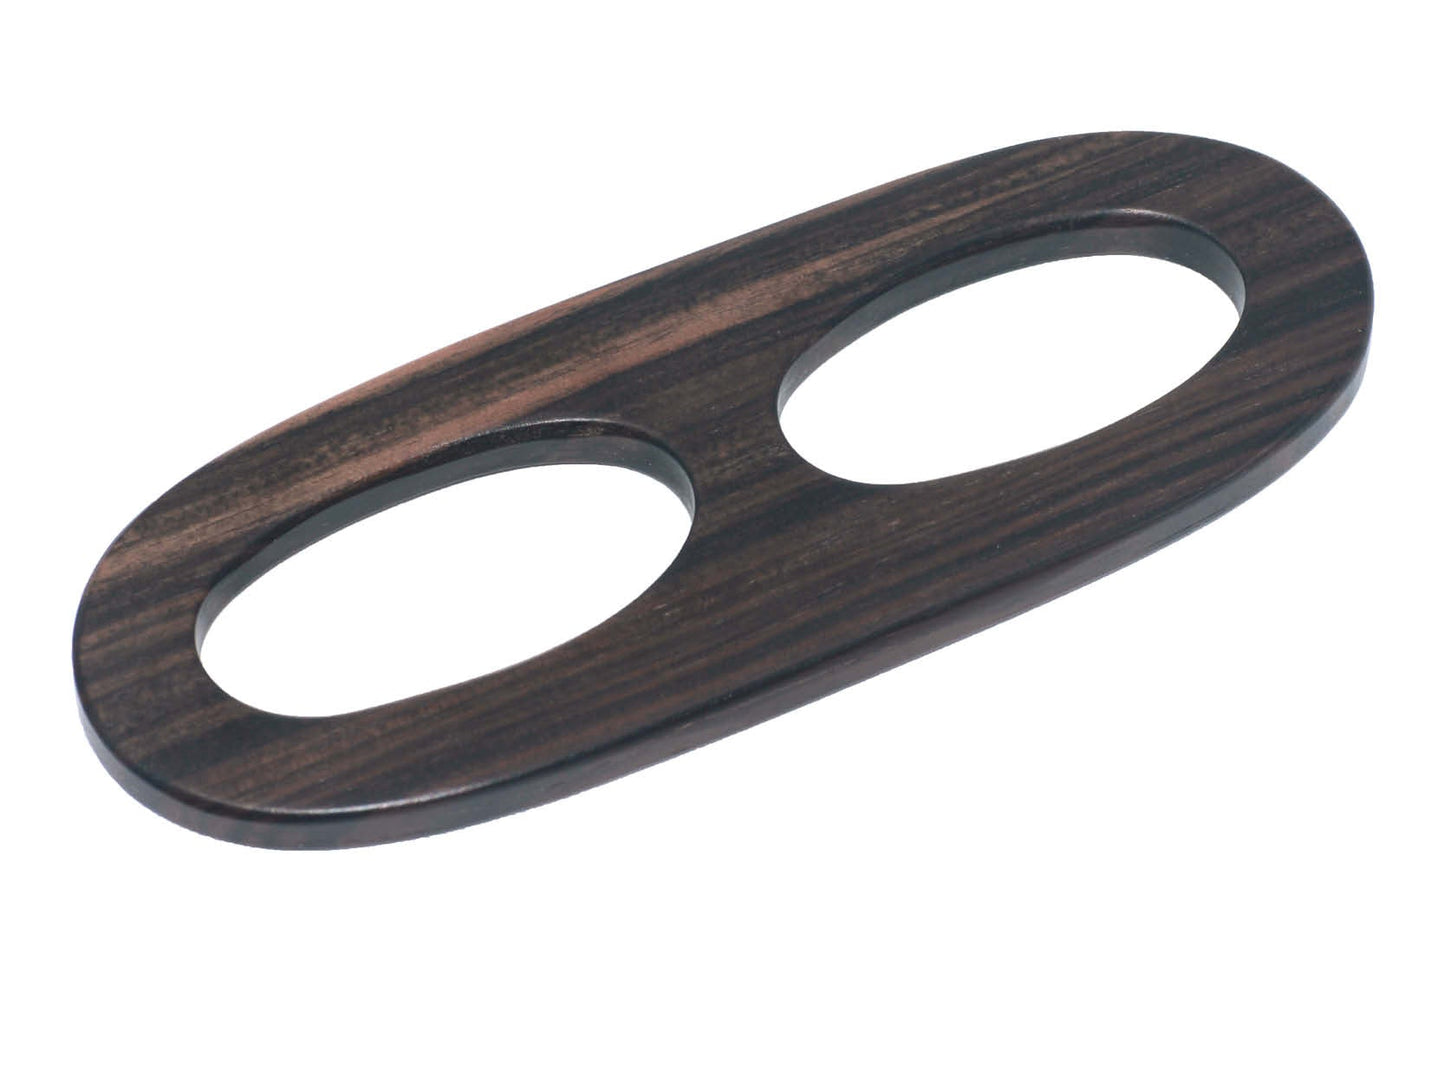 Tiger Ebony Wood Scarf Ring - X Large